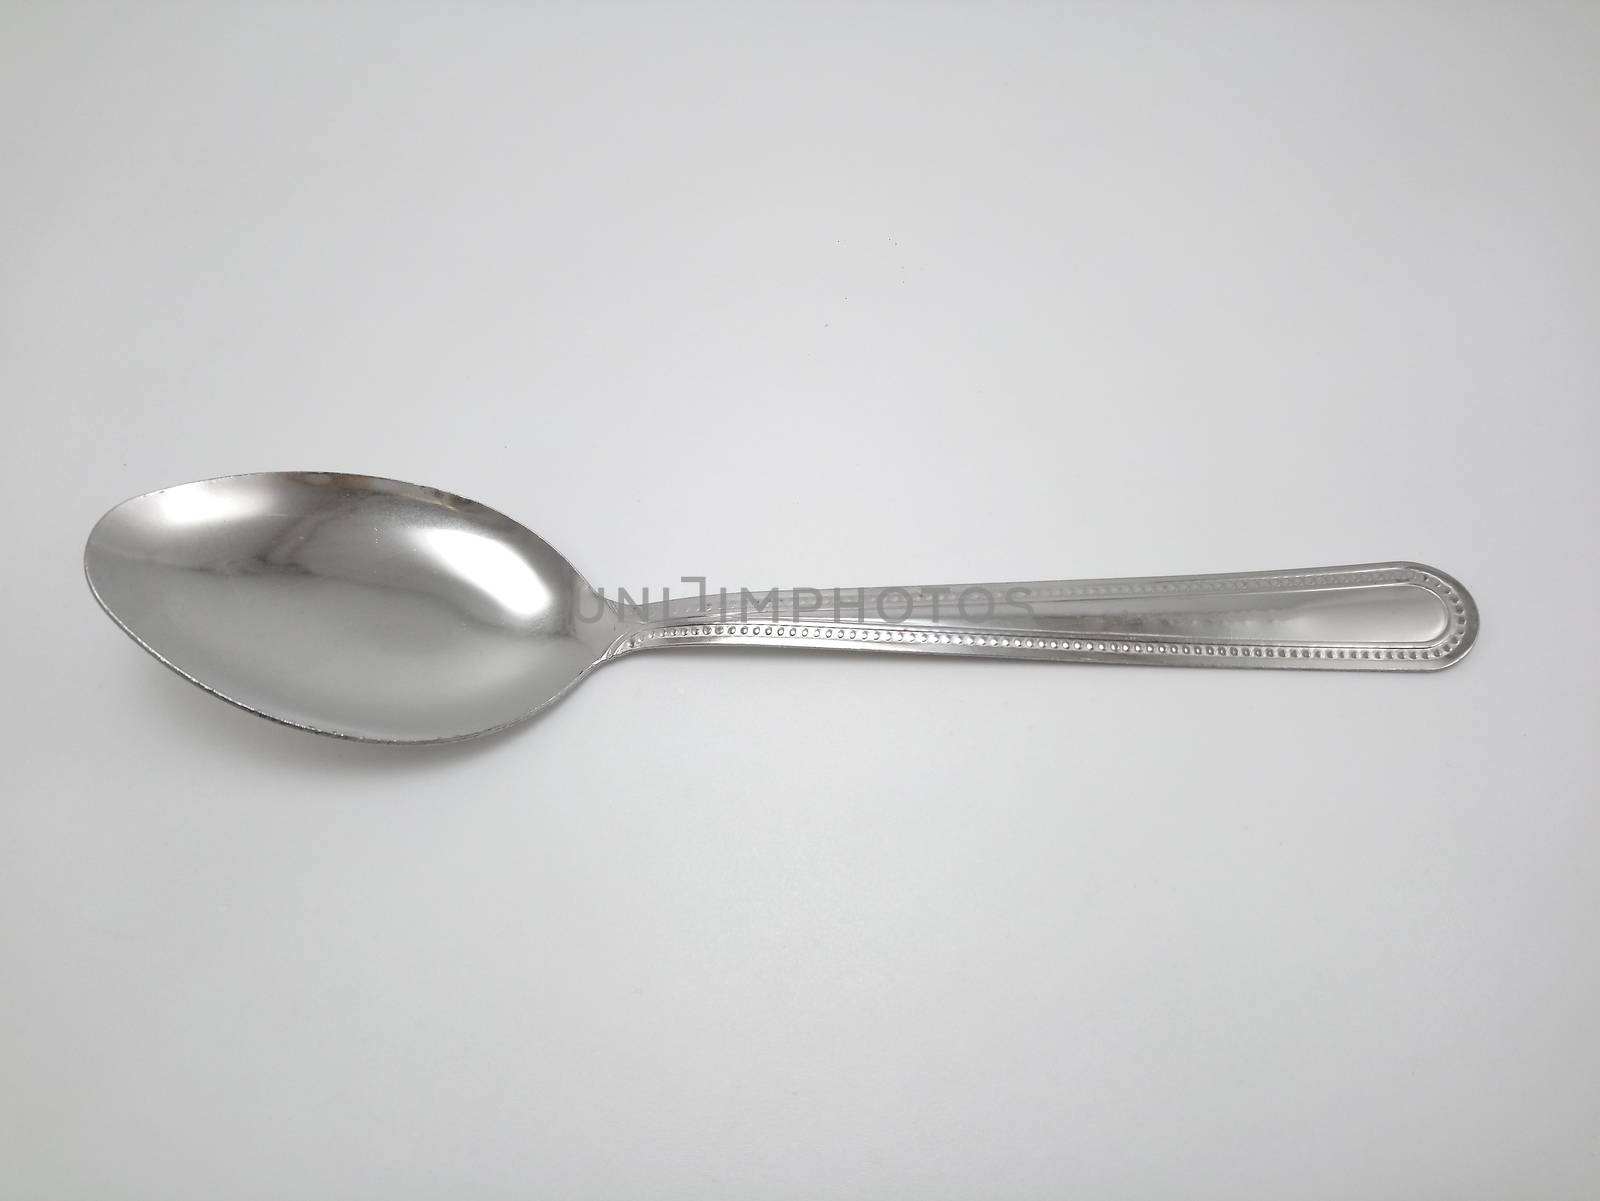 Stainless steel metal eating utensil spoon use for eating food meal